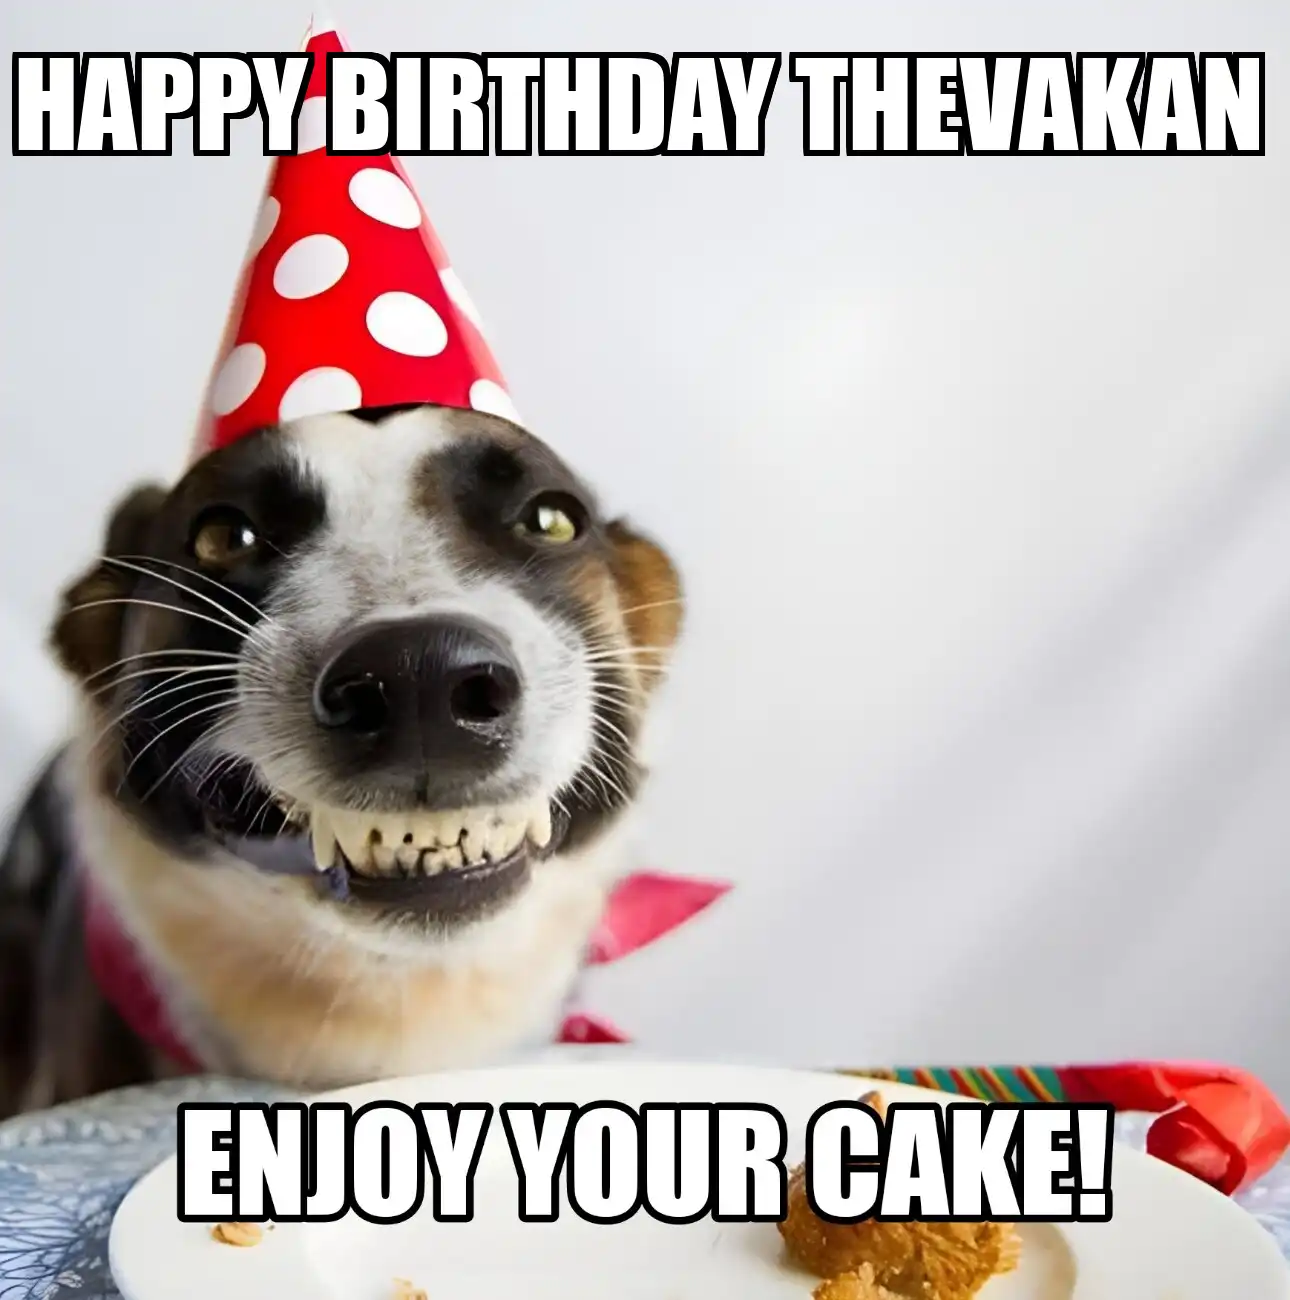 Happy Birthday Thevakan Enjoy Your Cake Dog Meme